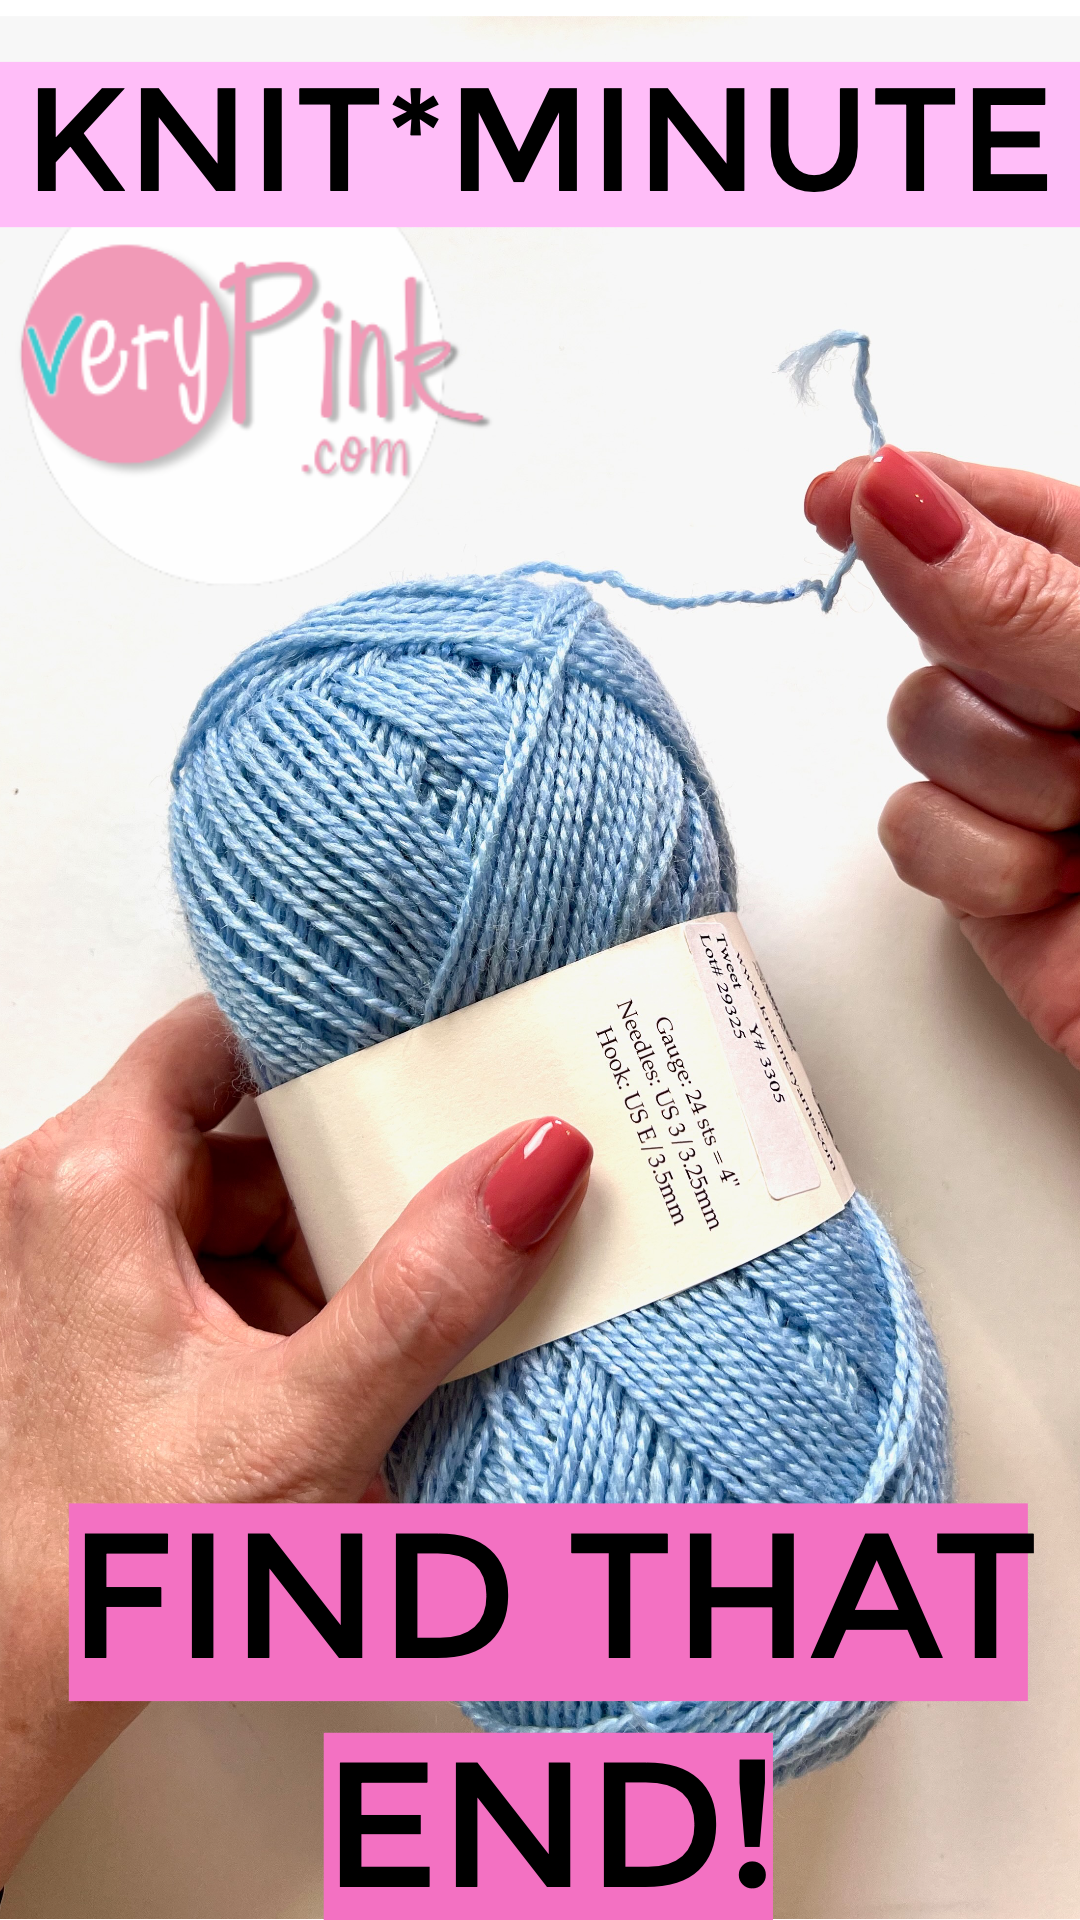 Learn to Knit Gloves - v e r y p i n k . c o m - knitting patterns